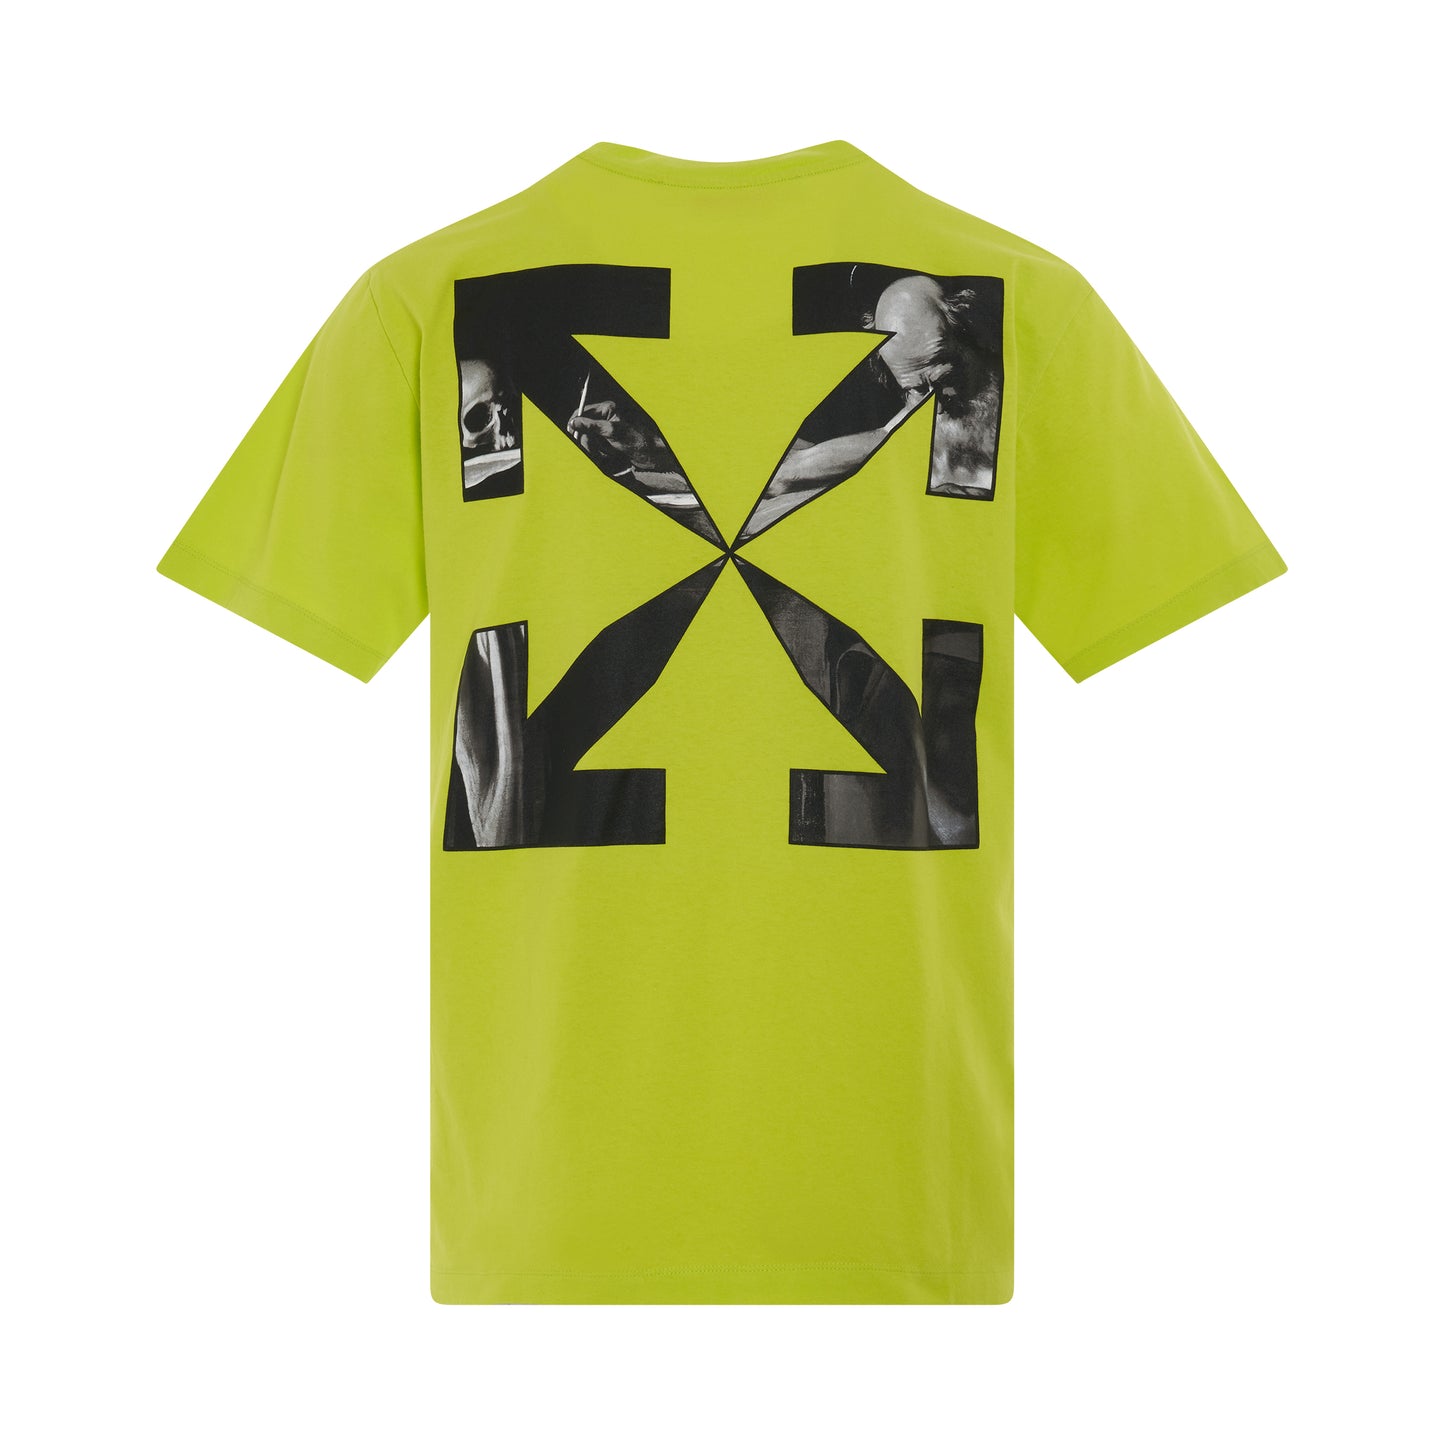 Caravaggio Arrow Slim Fit T-Shirt in Lime/Black